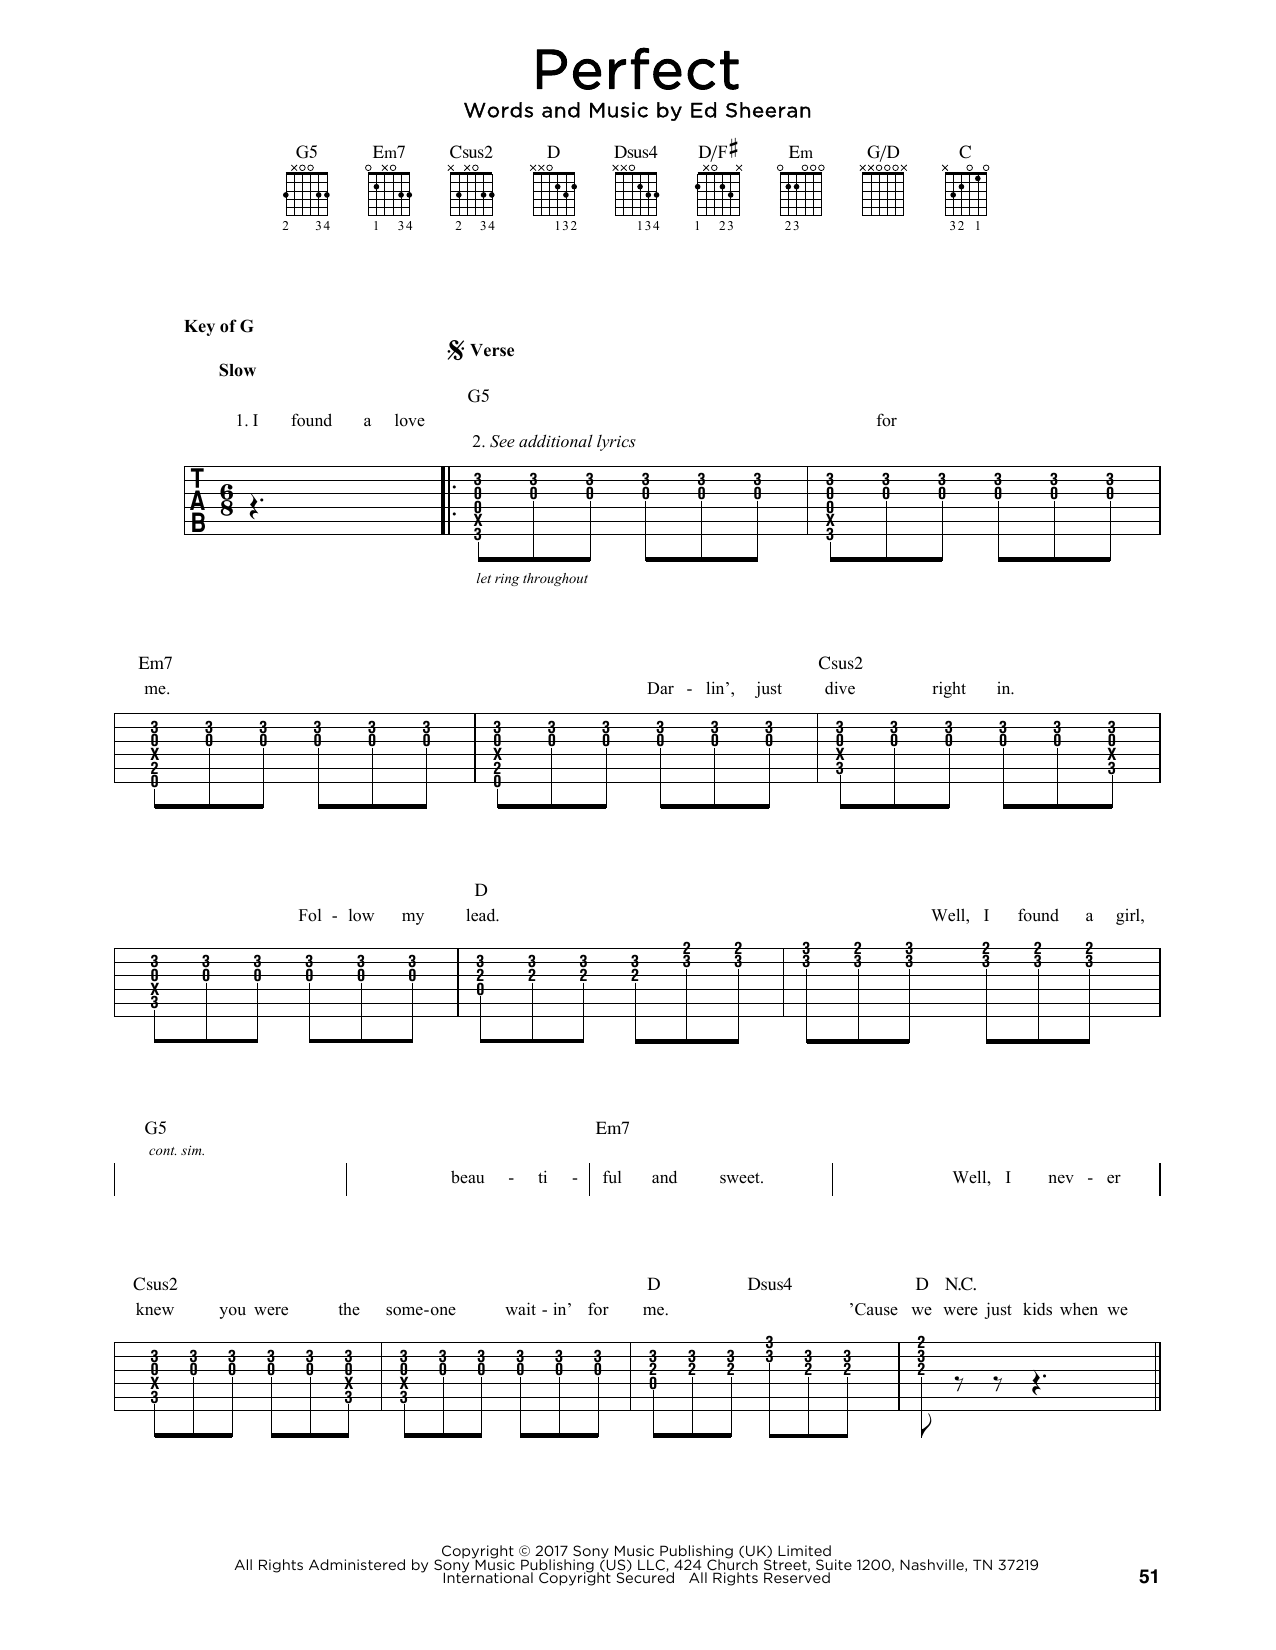 Ed Sheeran Perfect Sheet Music Notes & Chords for Lyrics & Chords - Download or Print PDF